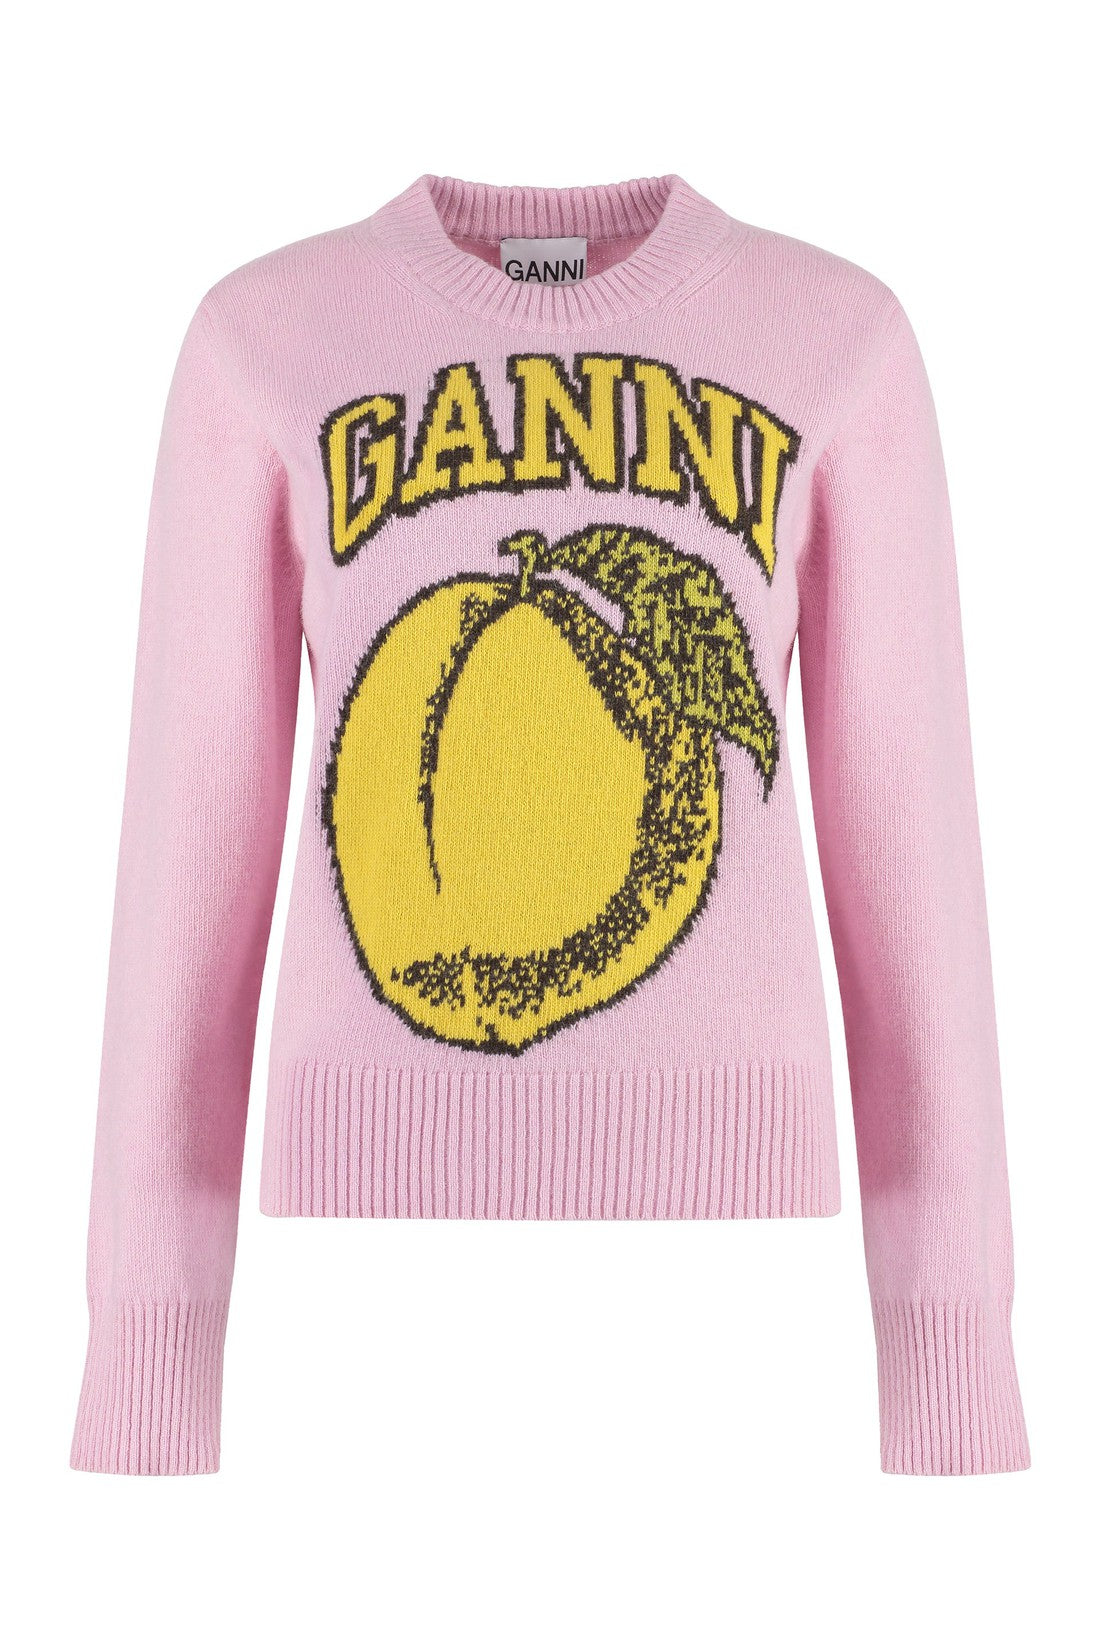 GANNI-OUTLET-SALE-Wool crew-neck sweater-ARCHIVIST